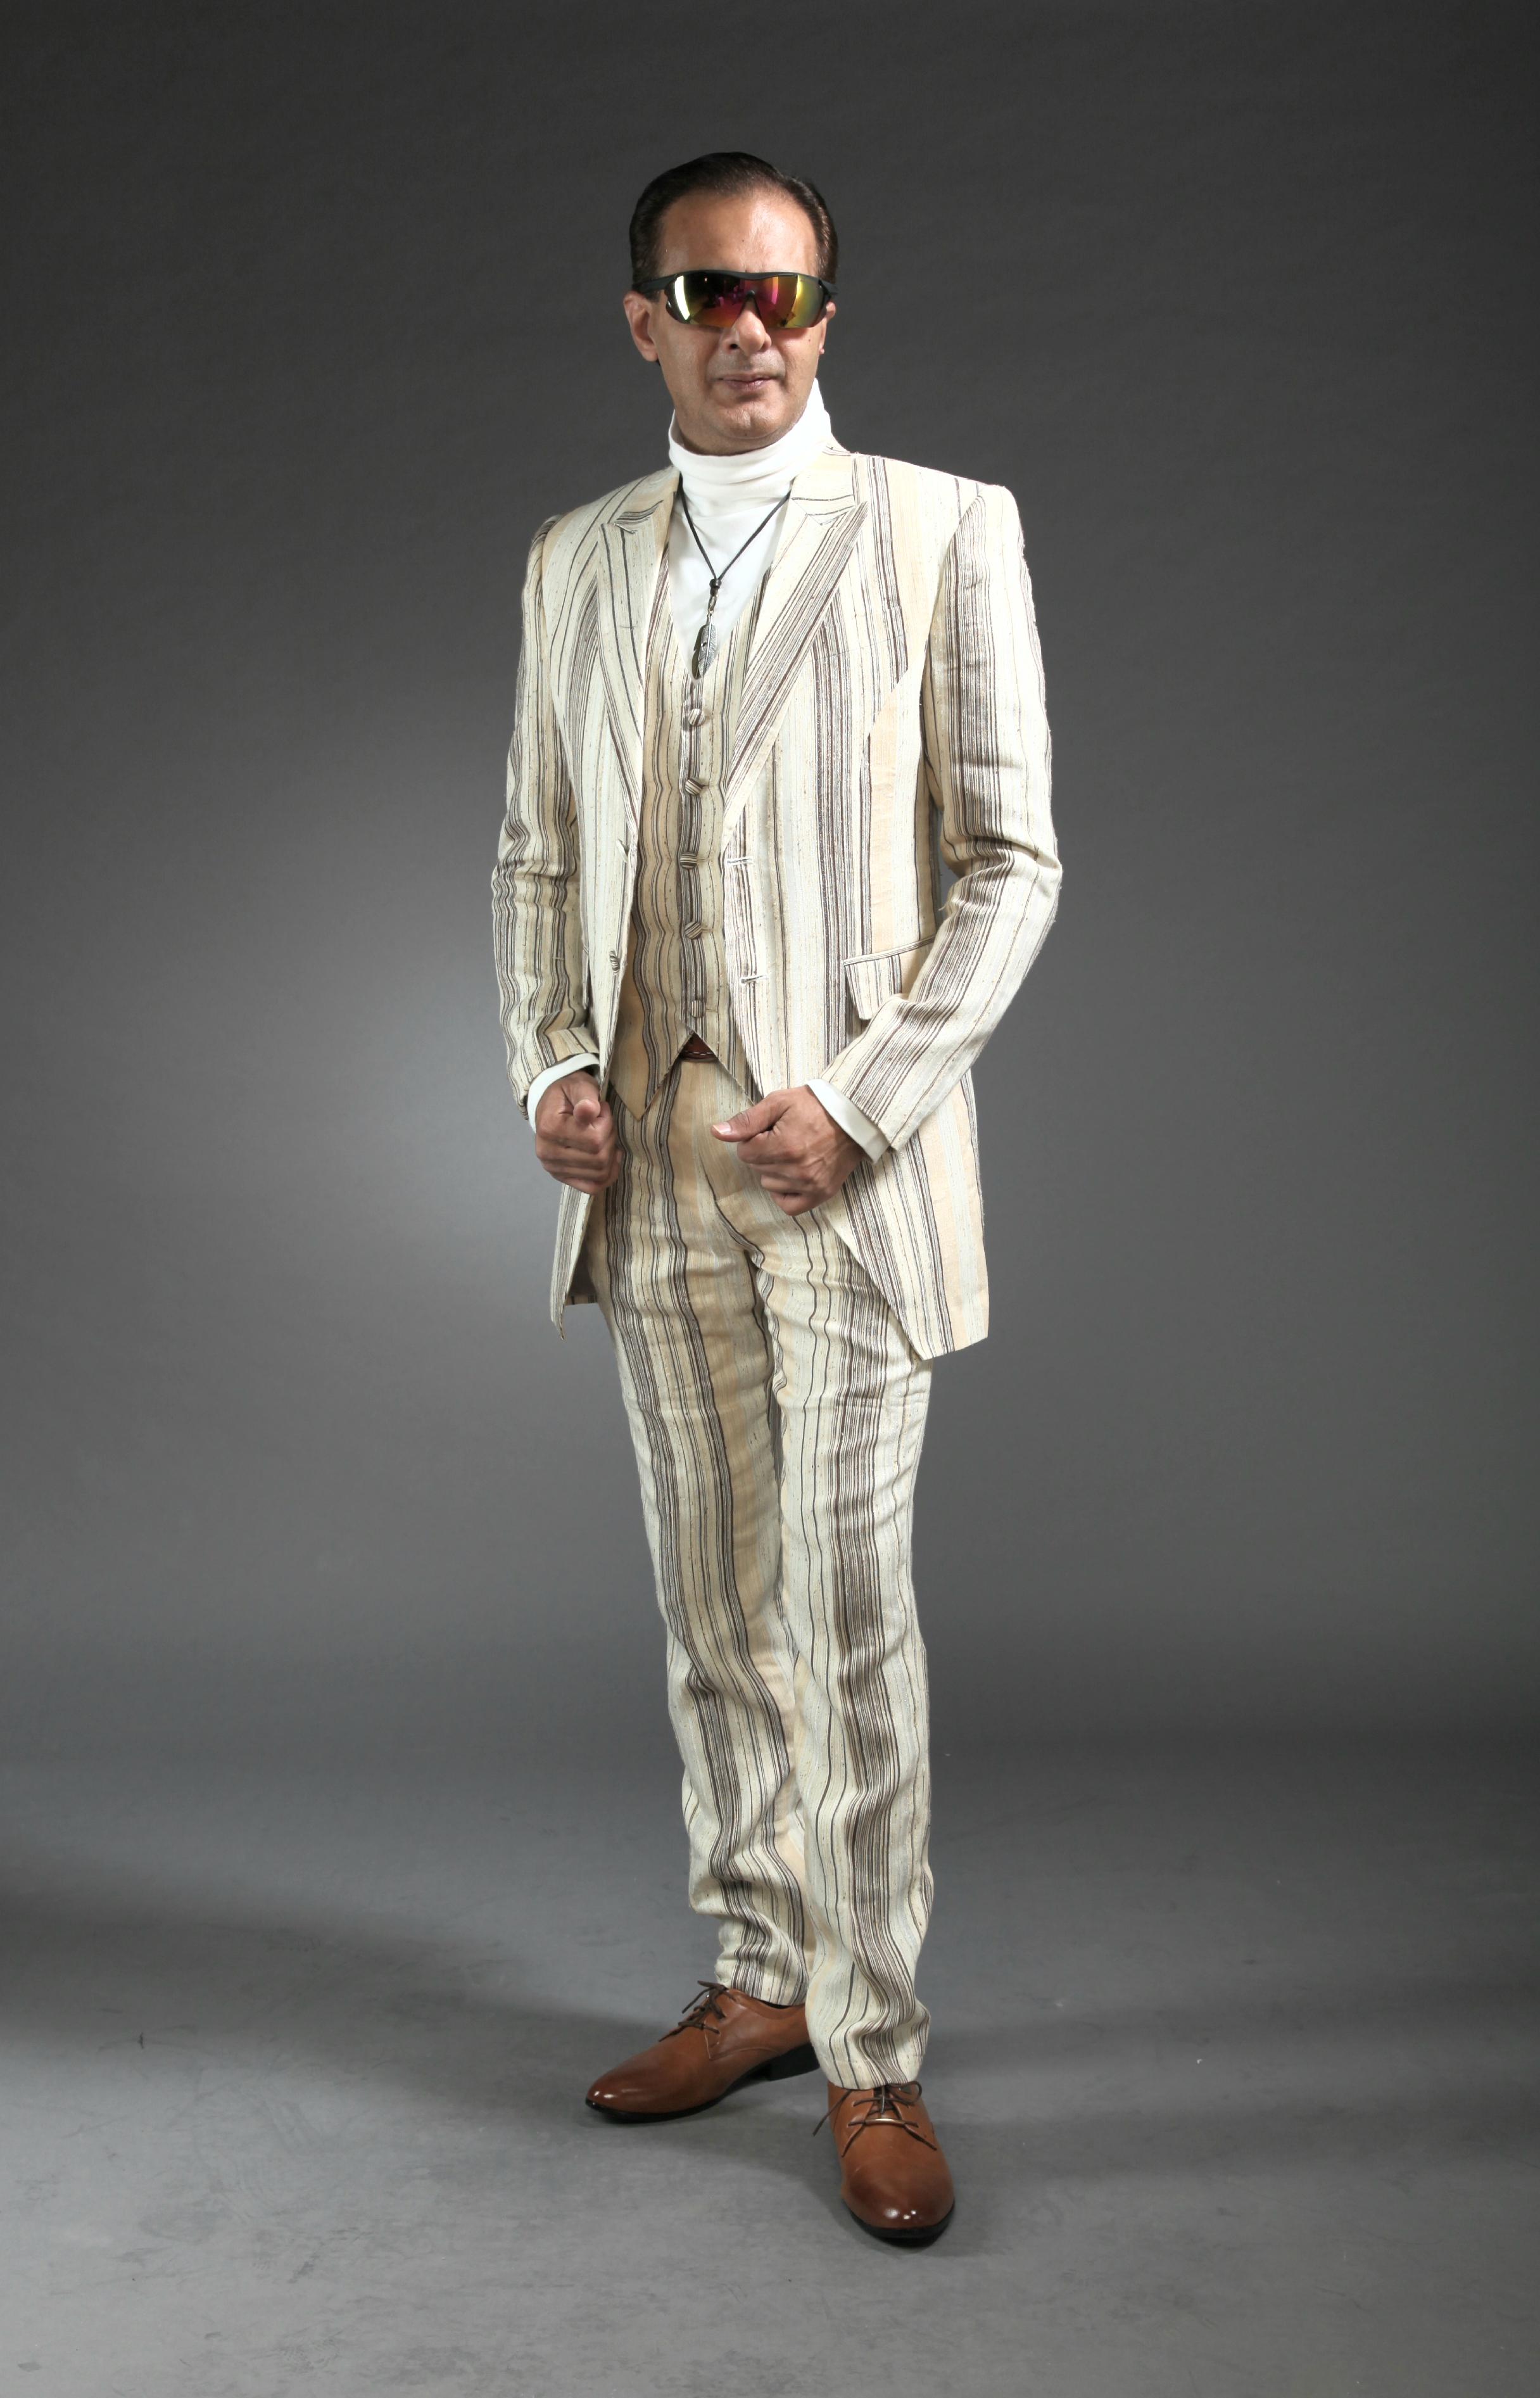 Suit Rental Suits Rent Hire Designer My Singapore Tailor Tailors Rentals Shop Tuxedo Black Tie Wedding Formal 62